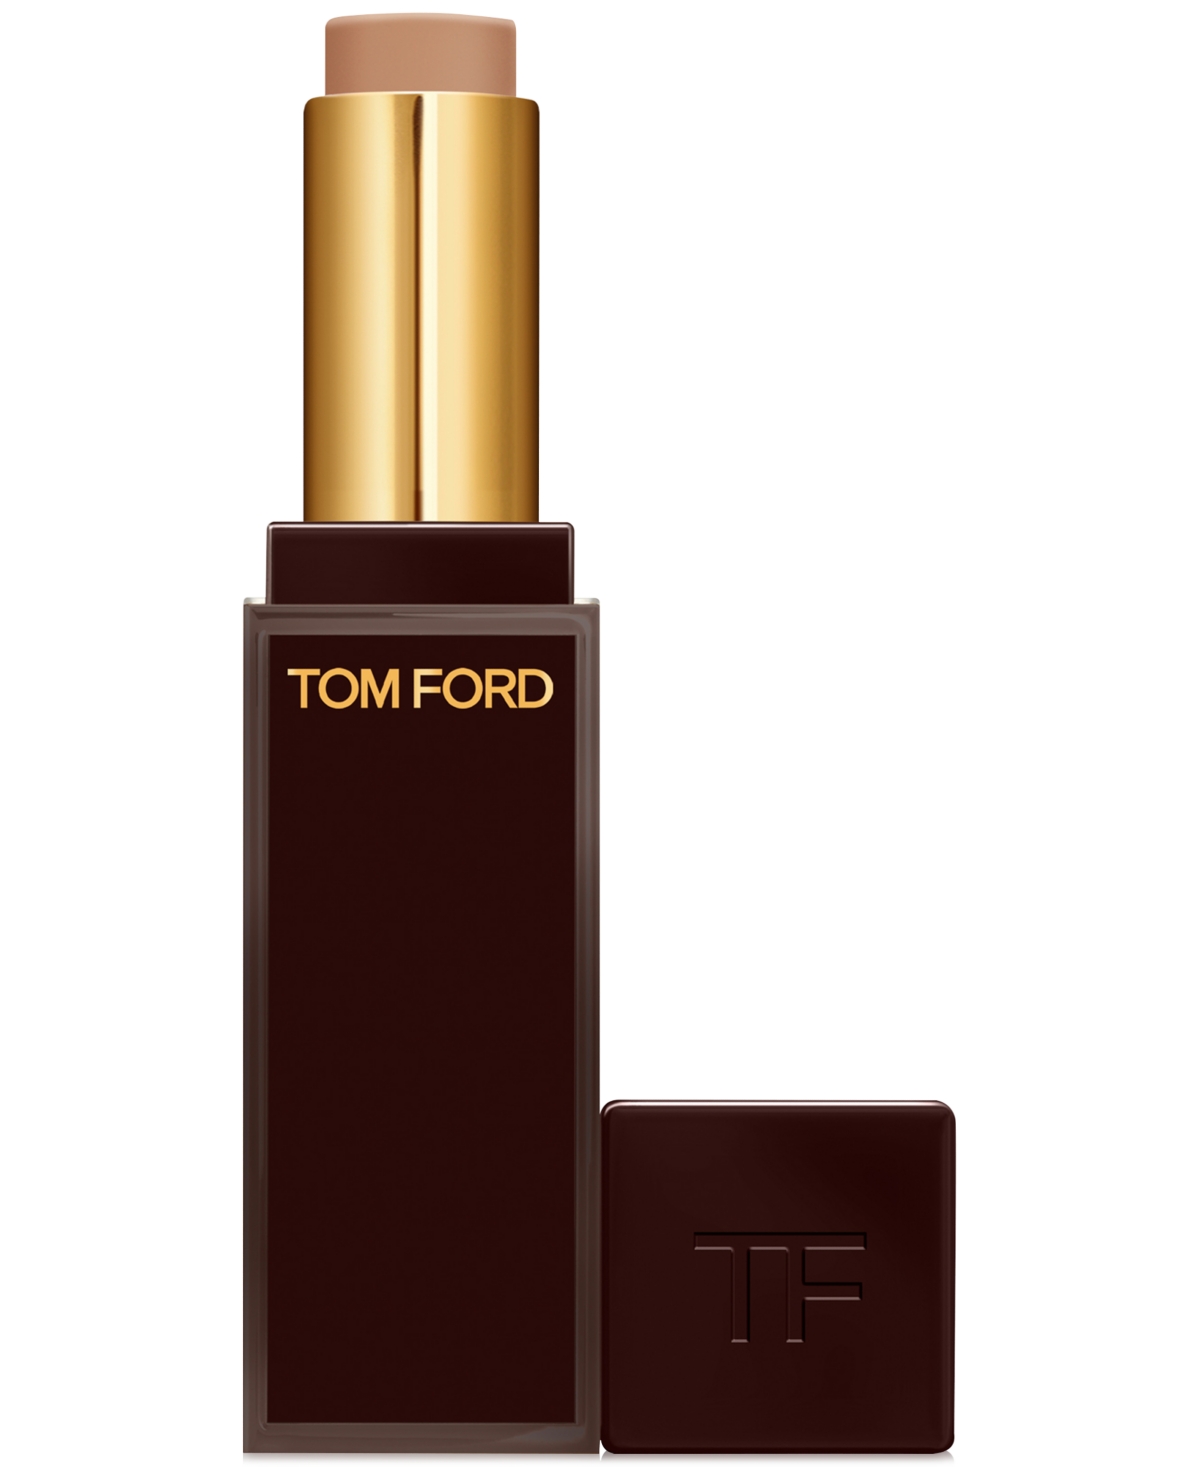 Tom Ford Traceless Soft Matte Concealer In C Caramel (tan Skin With Pink Undertones